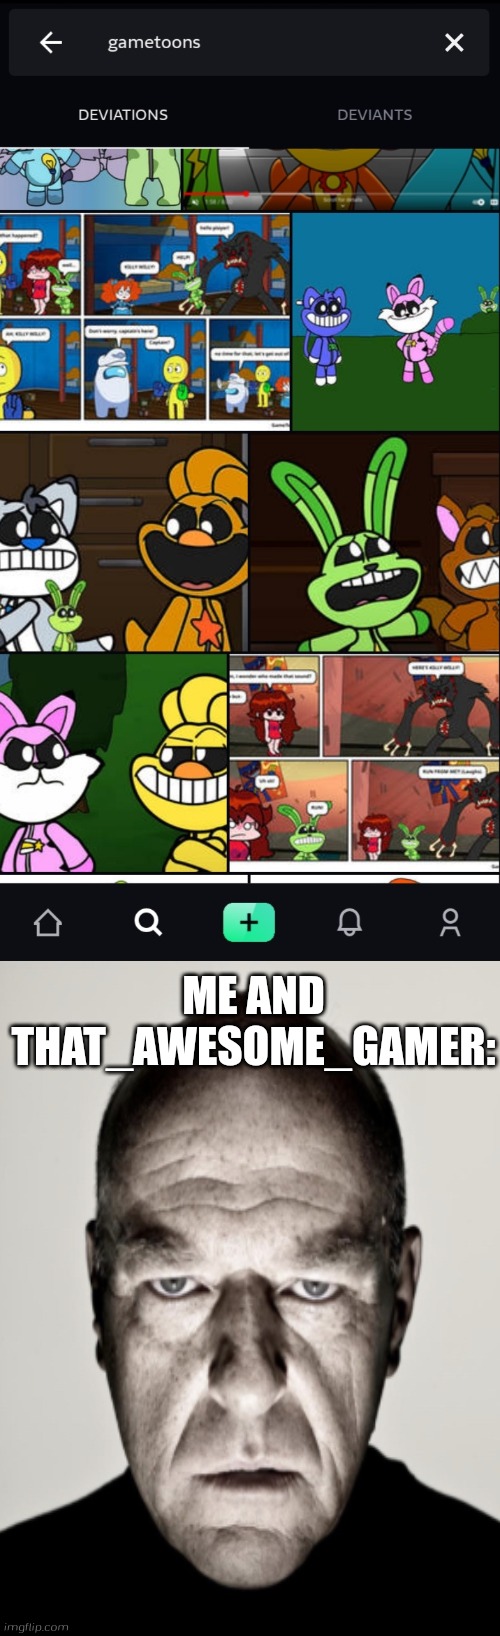 Deviantart Gametoons fans sucks | ME AND THAT_AWESOME_GAMER: | image tagged in deviantart,gametoons,poppy playtime,smiling critters | made w/ Imgflip meme maker